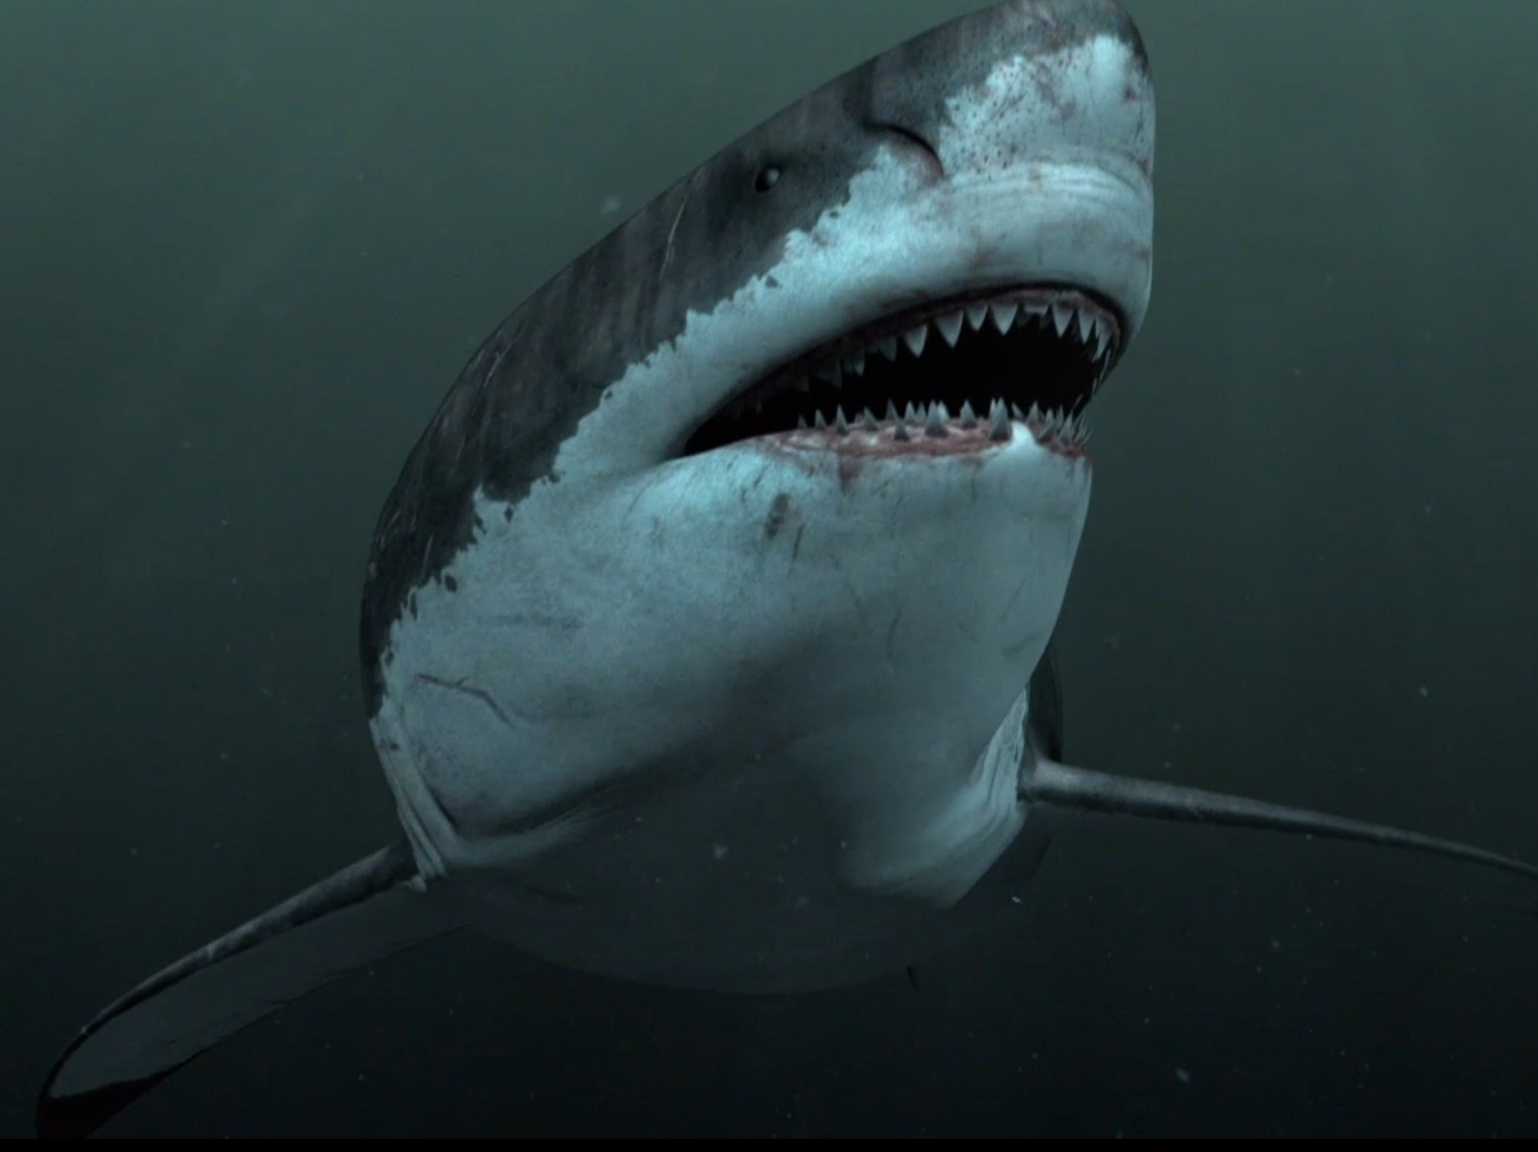 Shark Week I16 Megalodon Sightings Background For iPhone